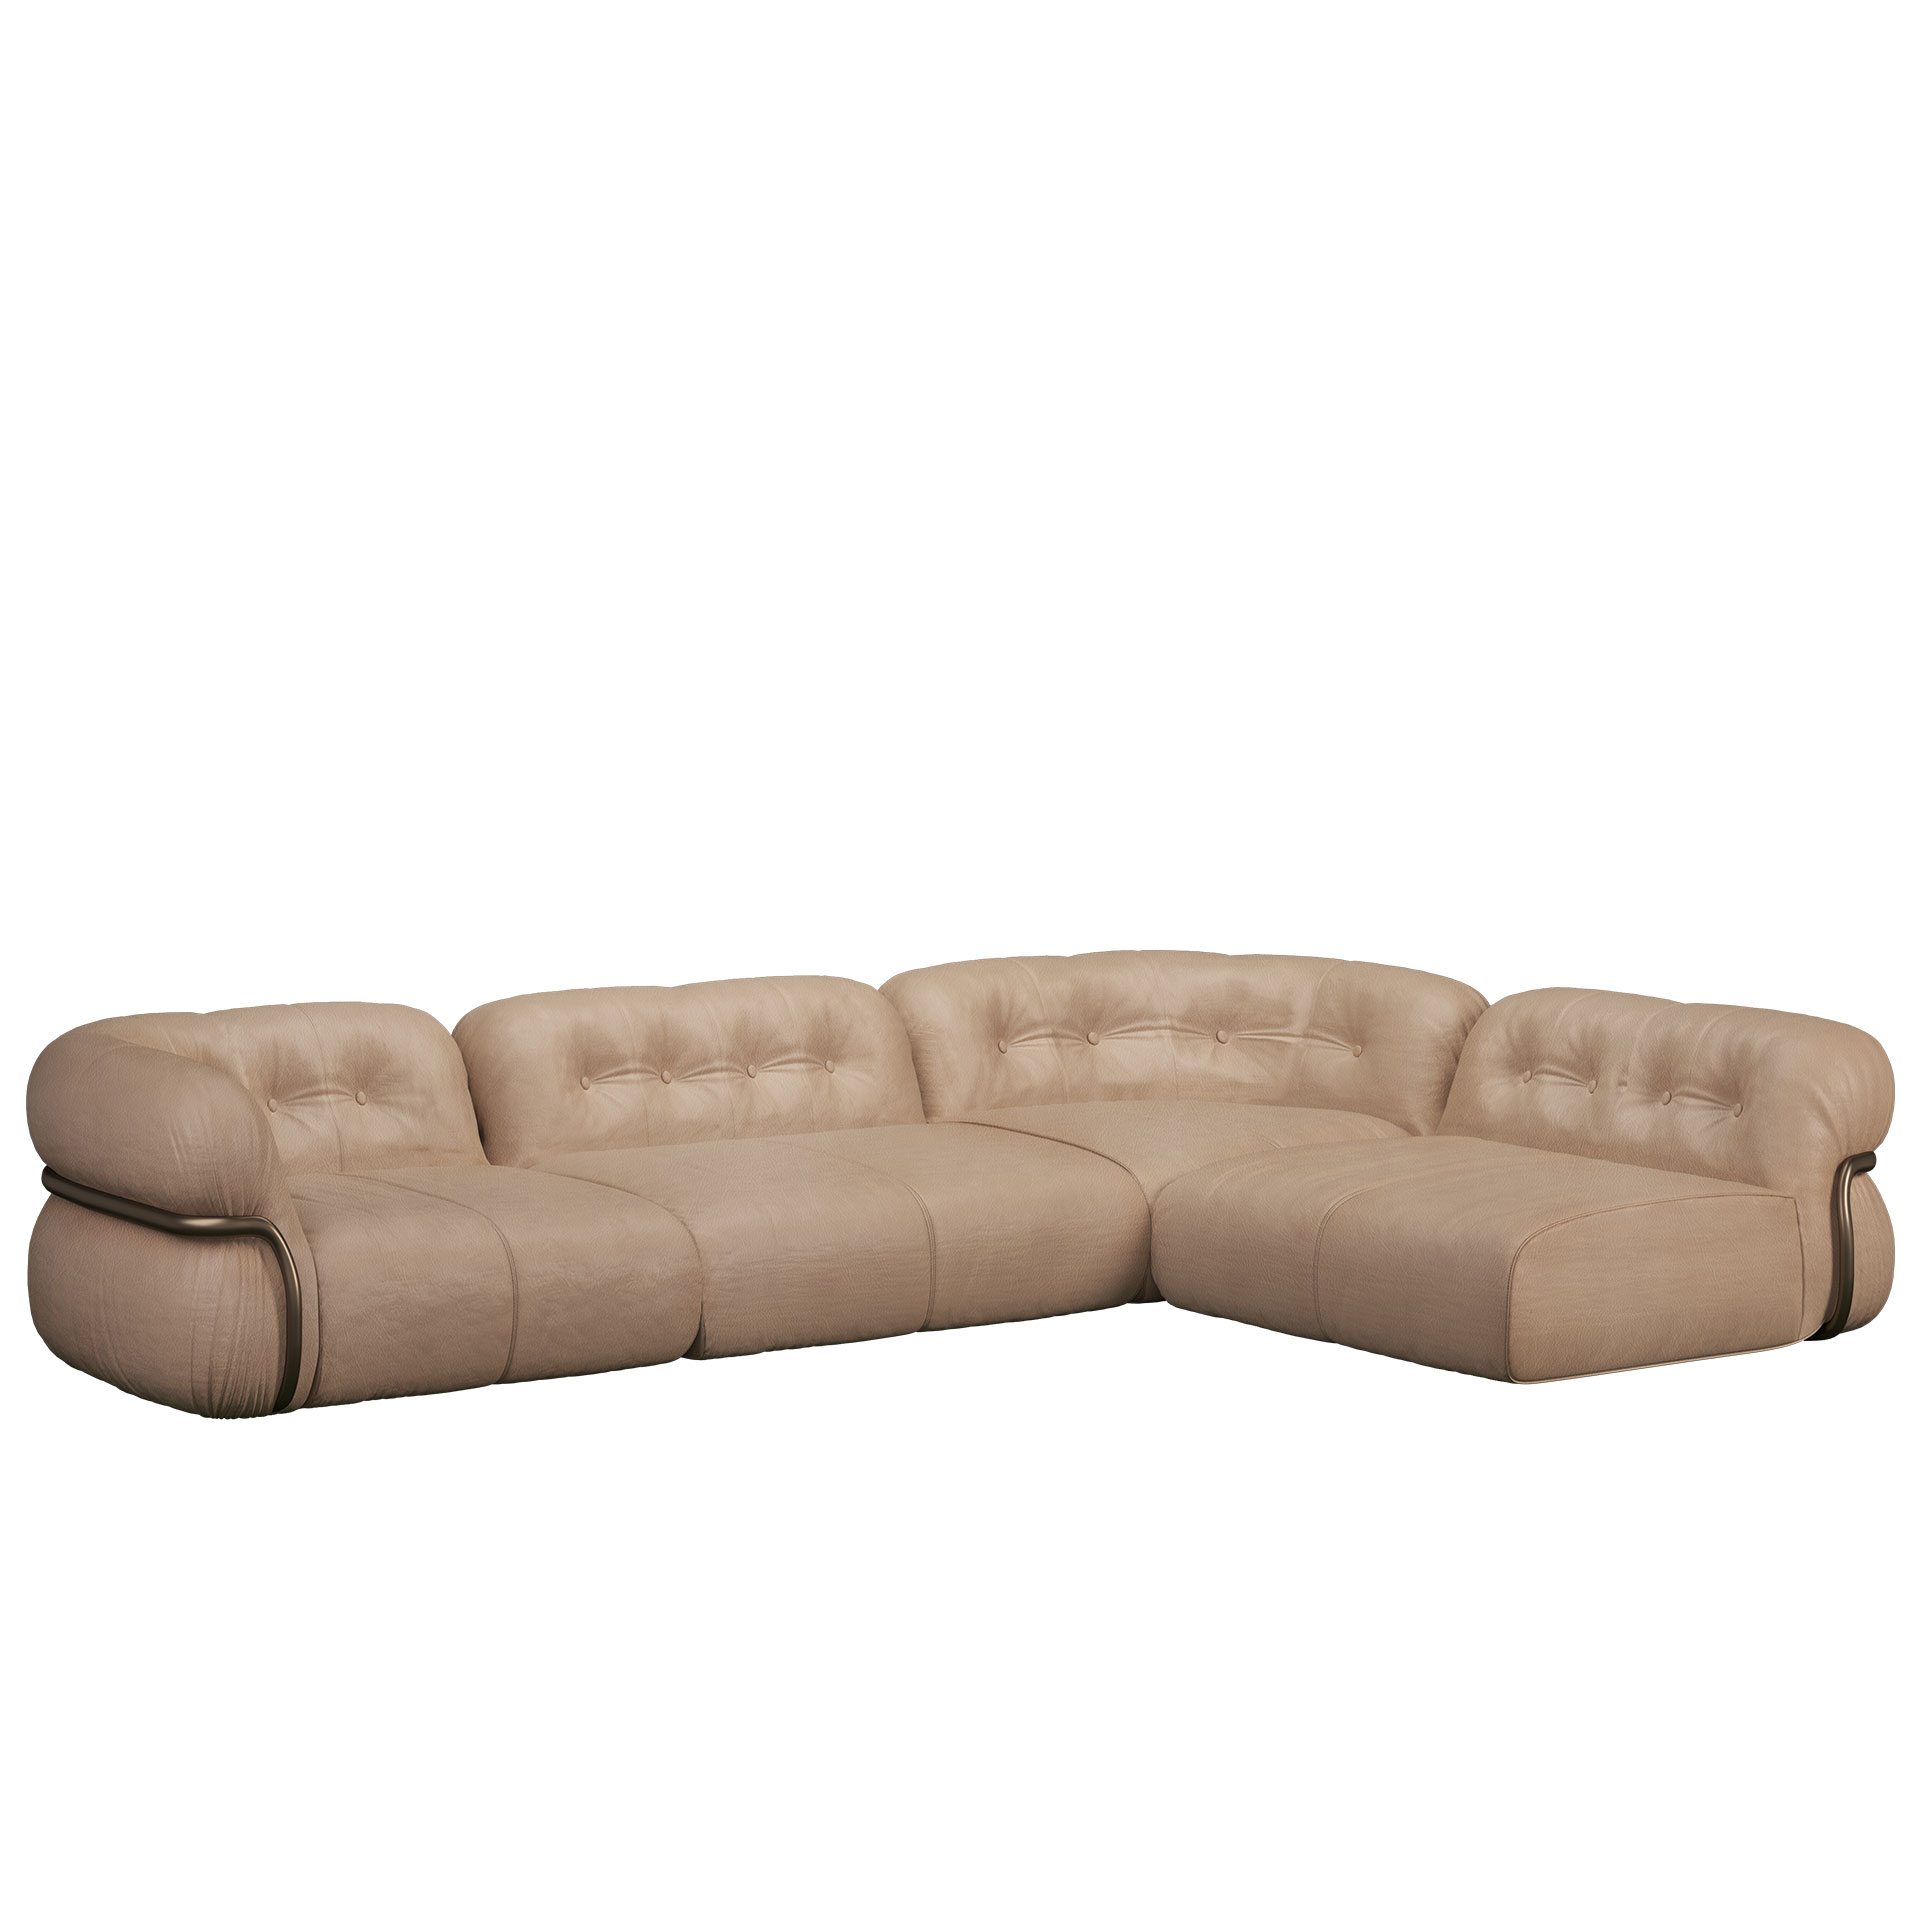 Joshua modular sofa